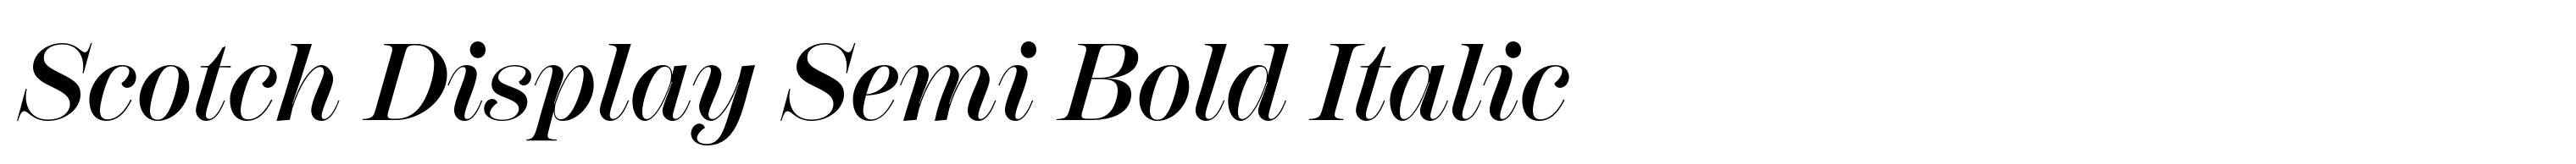 Scotch Display Semi Bold Italic